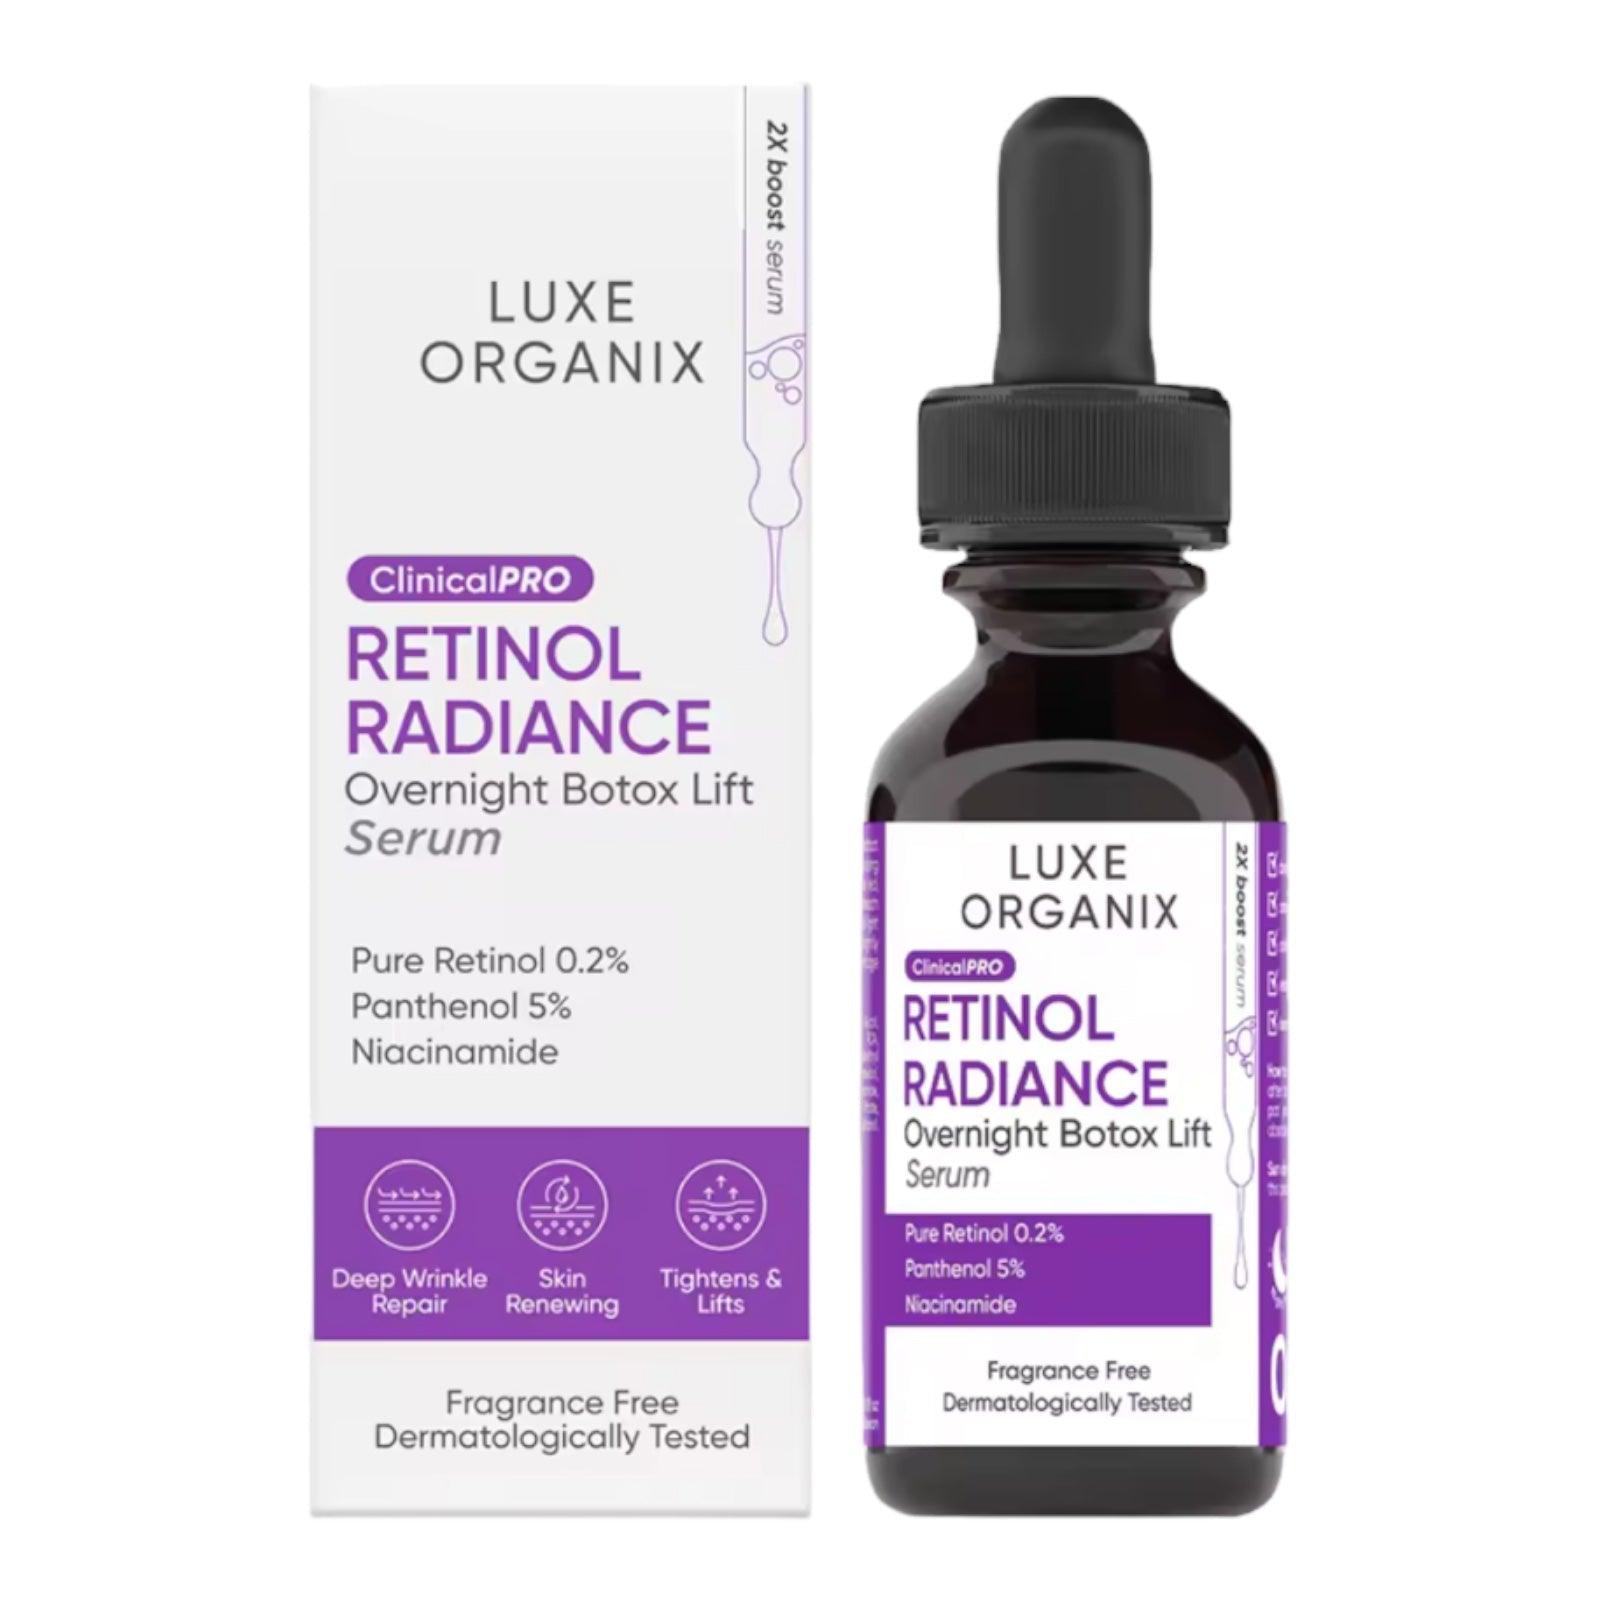 Luxe Organix Clinical Pro Retinol Radiance Serum 30ml - Astrid & Rose